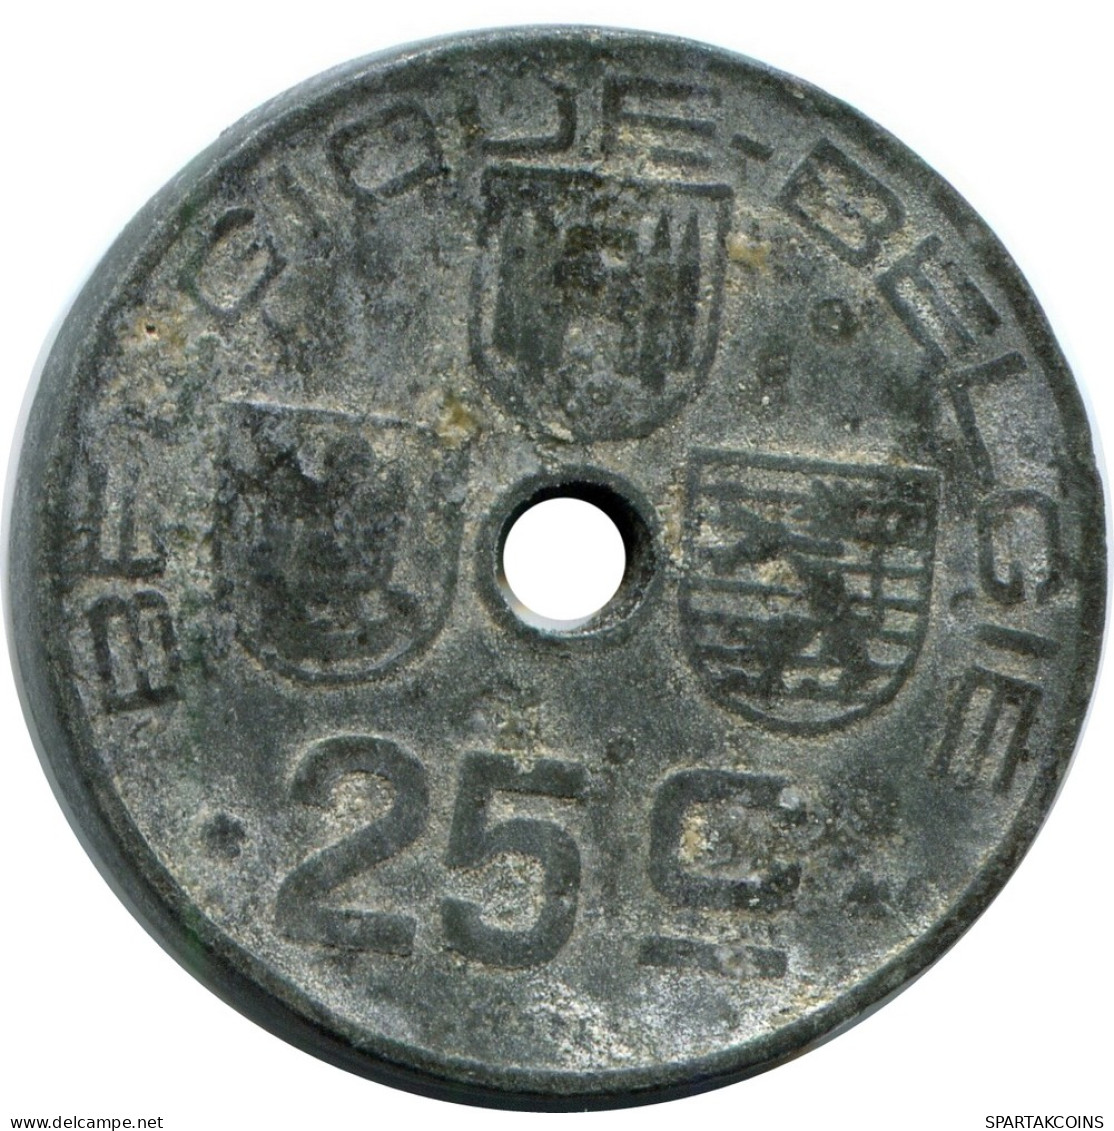 25 CENTIMES 1942 BELGIQUE-BELGIE BELGIEN BELGIUM Münze #AW980.D - 25 Centimes